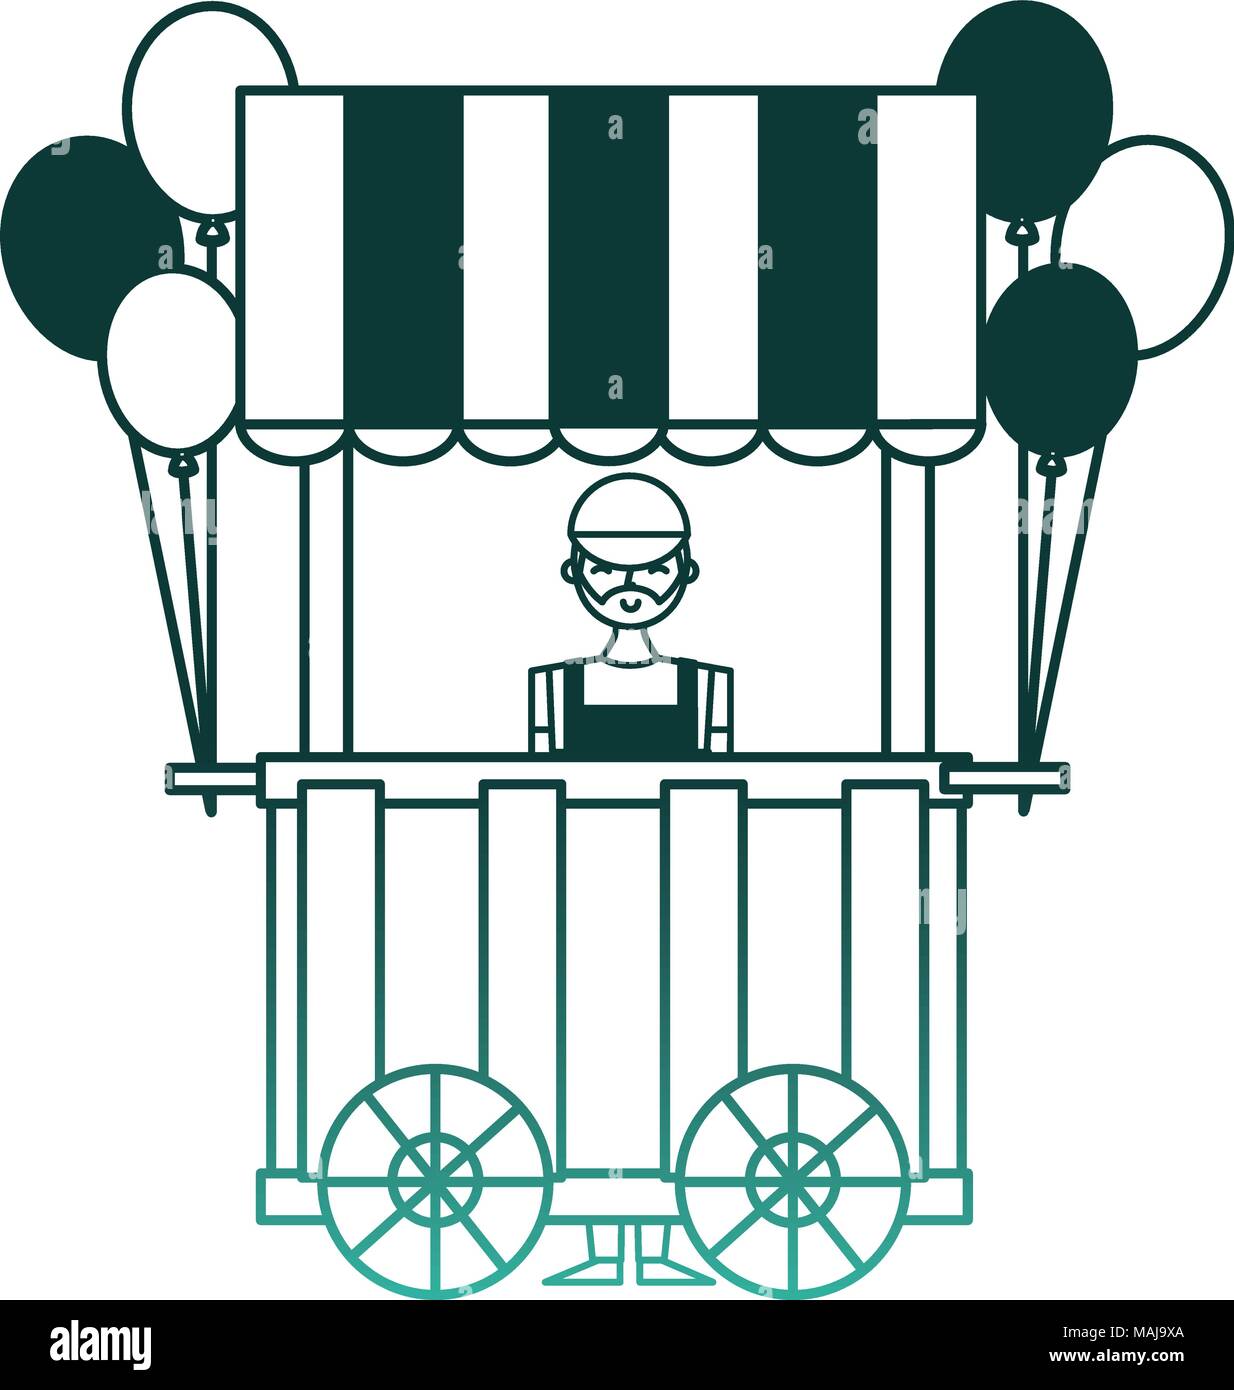 Zirkus pumpt Luft Shop mit Verkäufer Vector Illustration Design  Stock-Vektorgrafik - Alamy